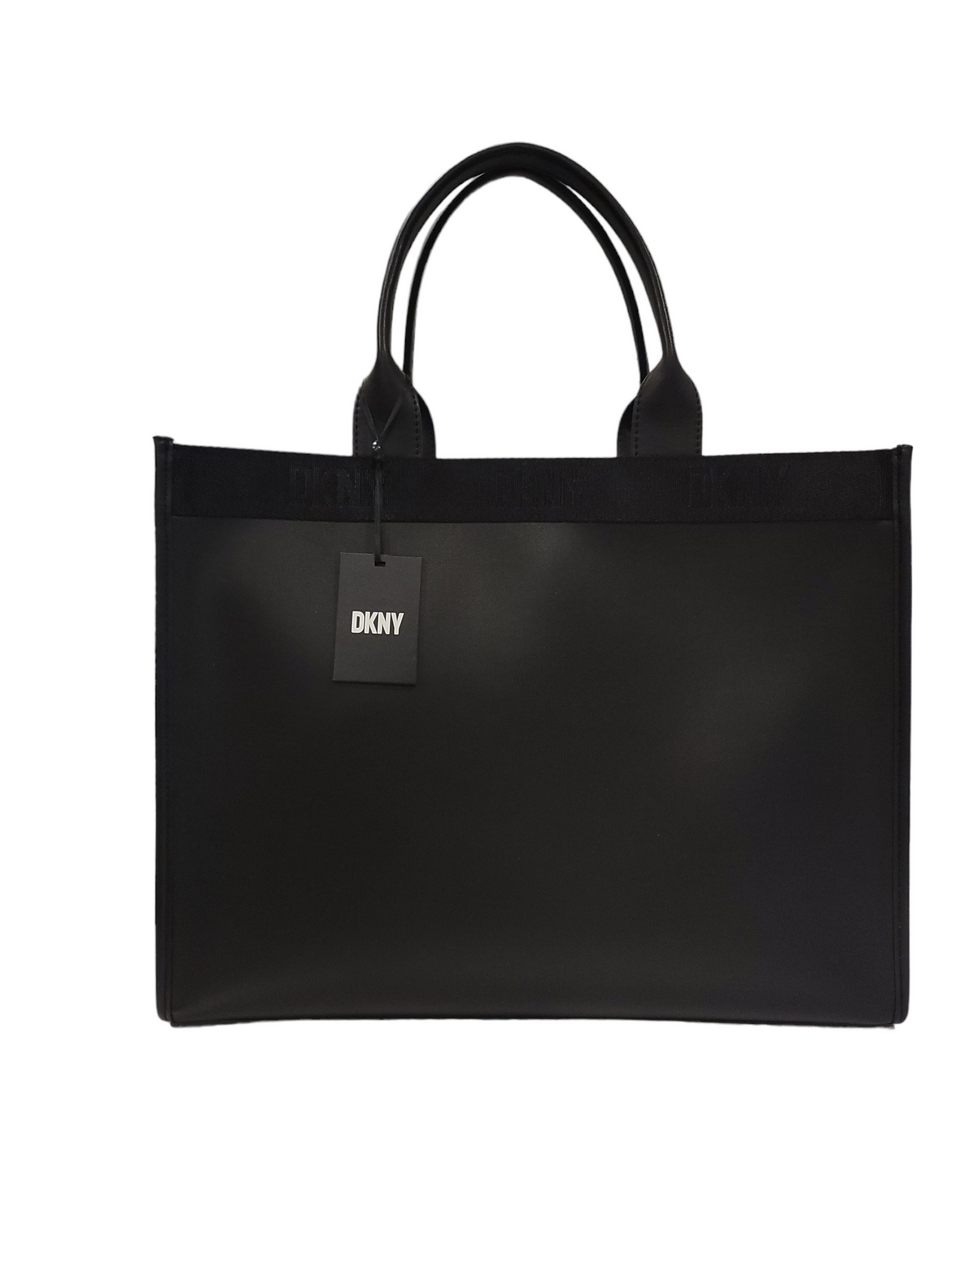 DKNY real leather ladies large black purse | eBay